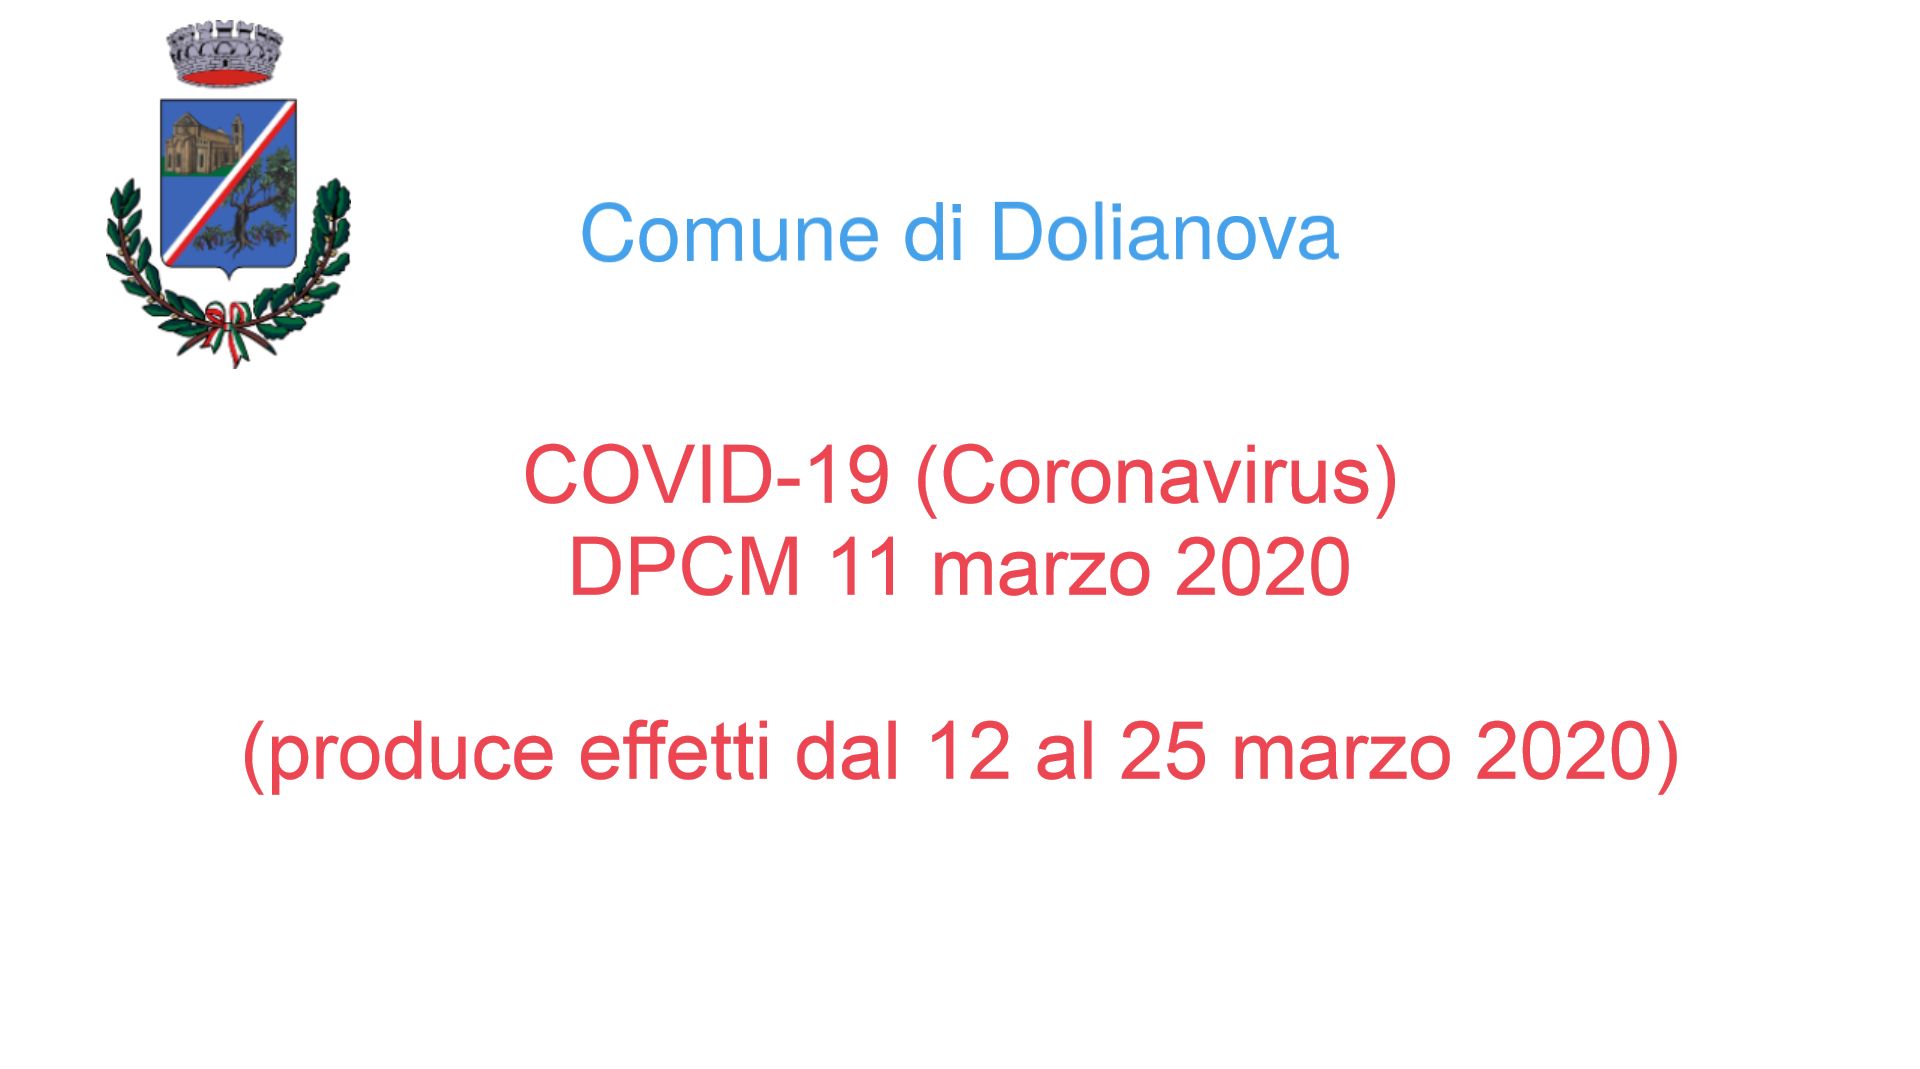 COVID-19 (Coronavirus) - DPCM 11 marzo 2020